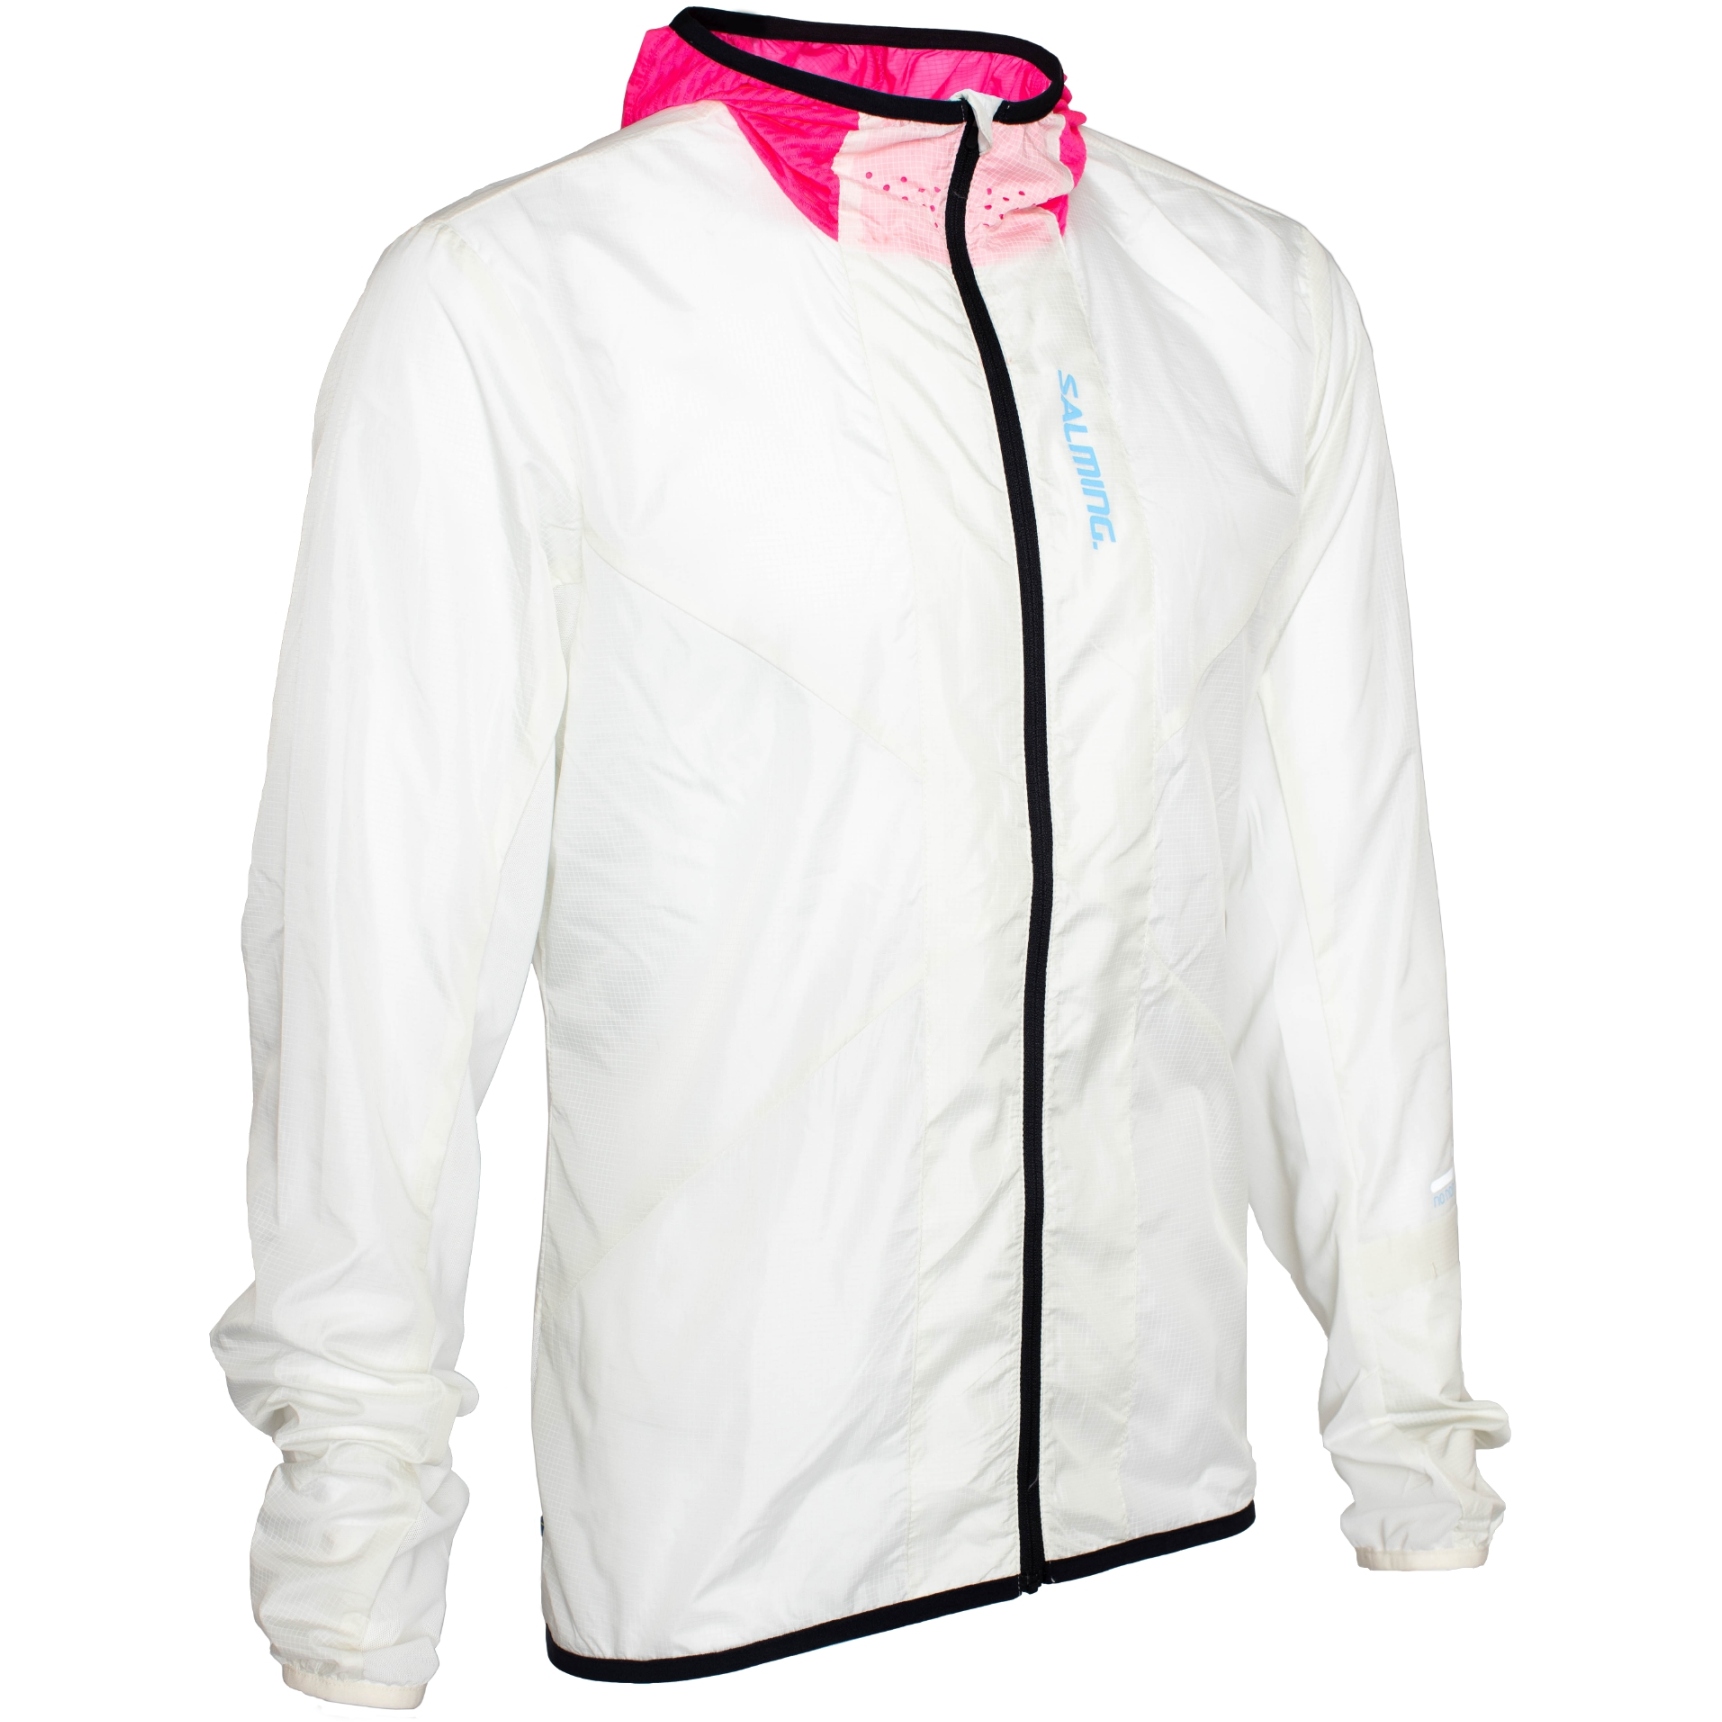 Productfoto van Salming Sarek Jacket 21 Unisex - cloud white/pink